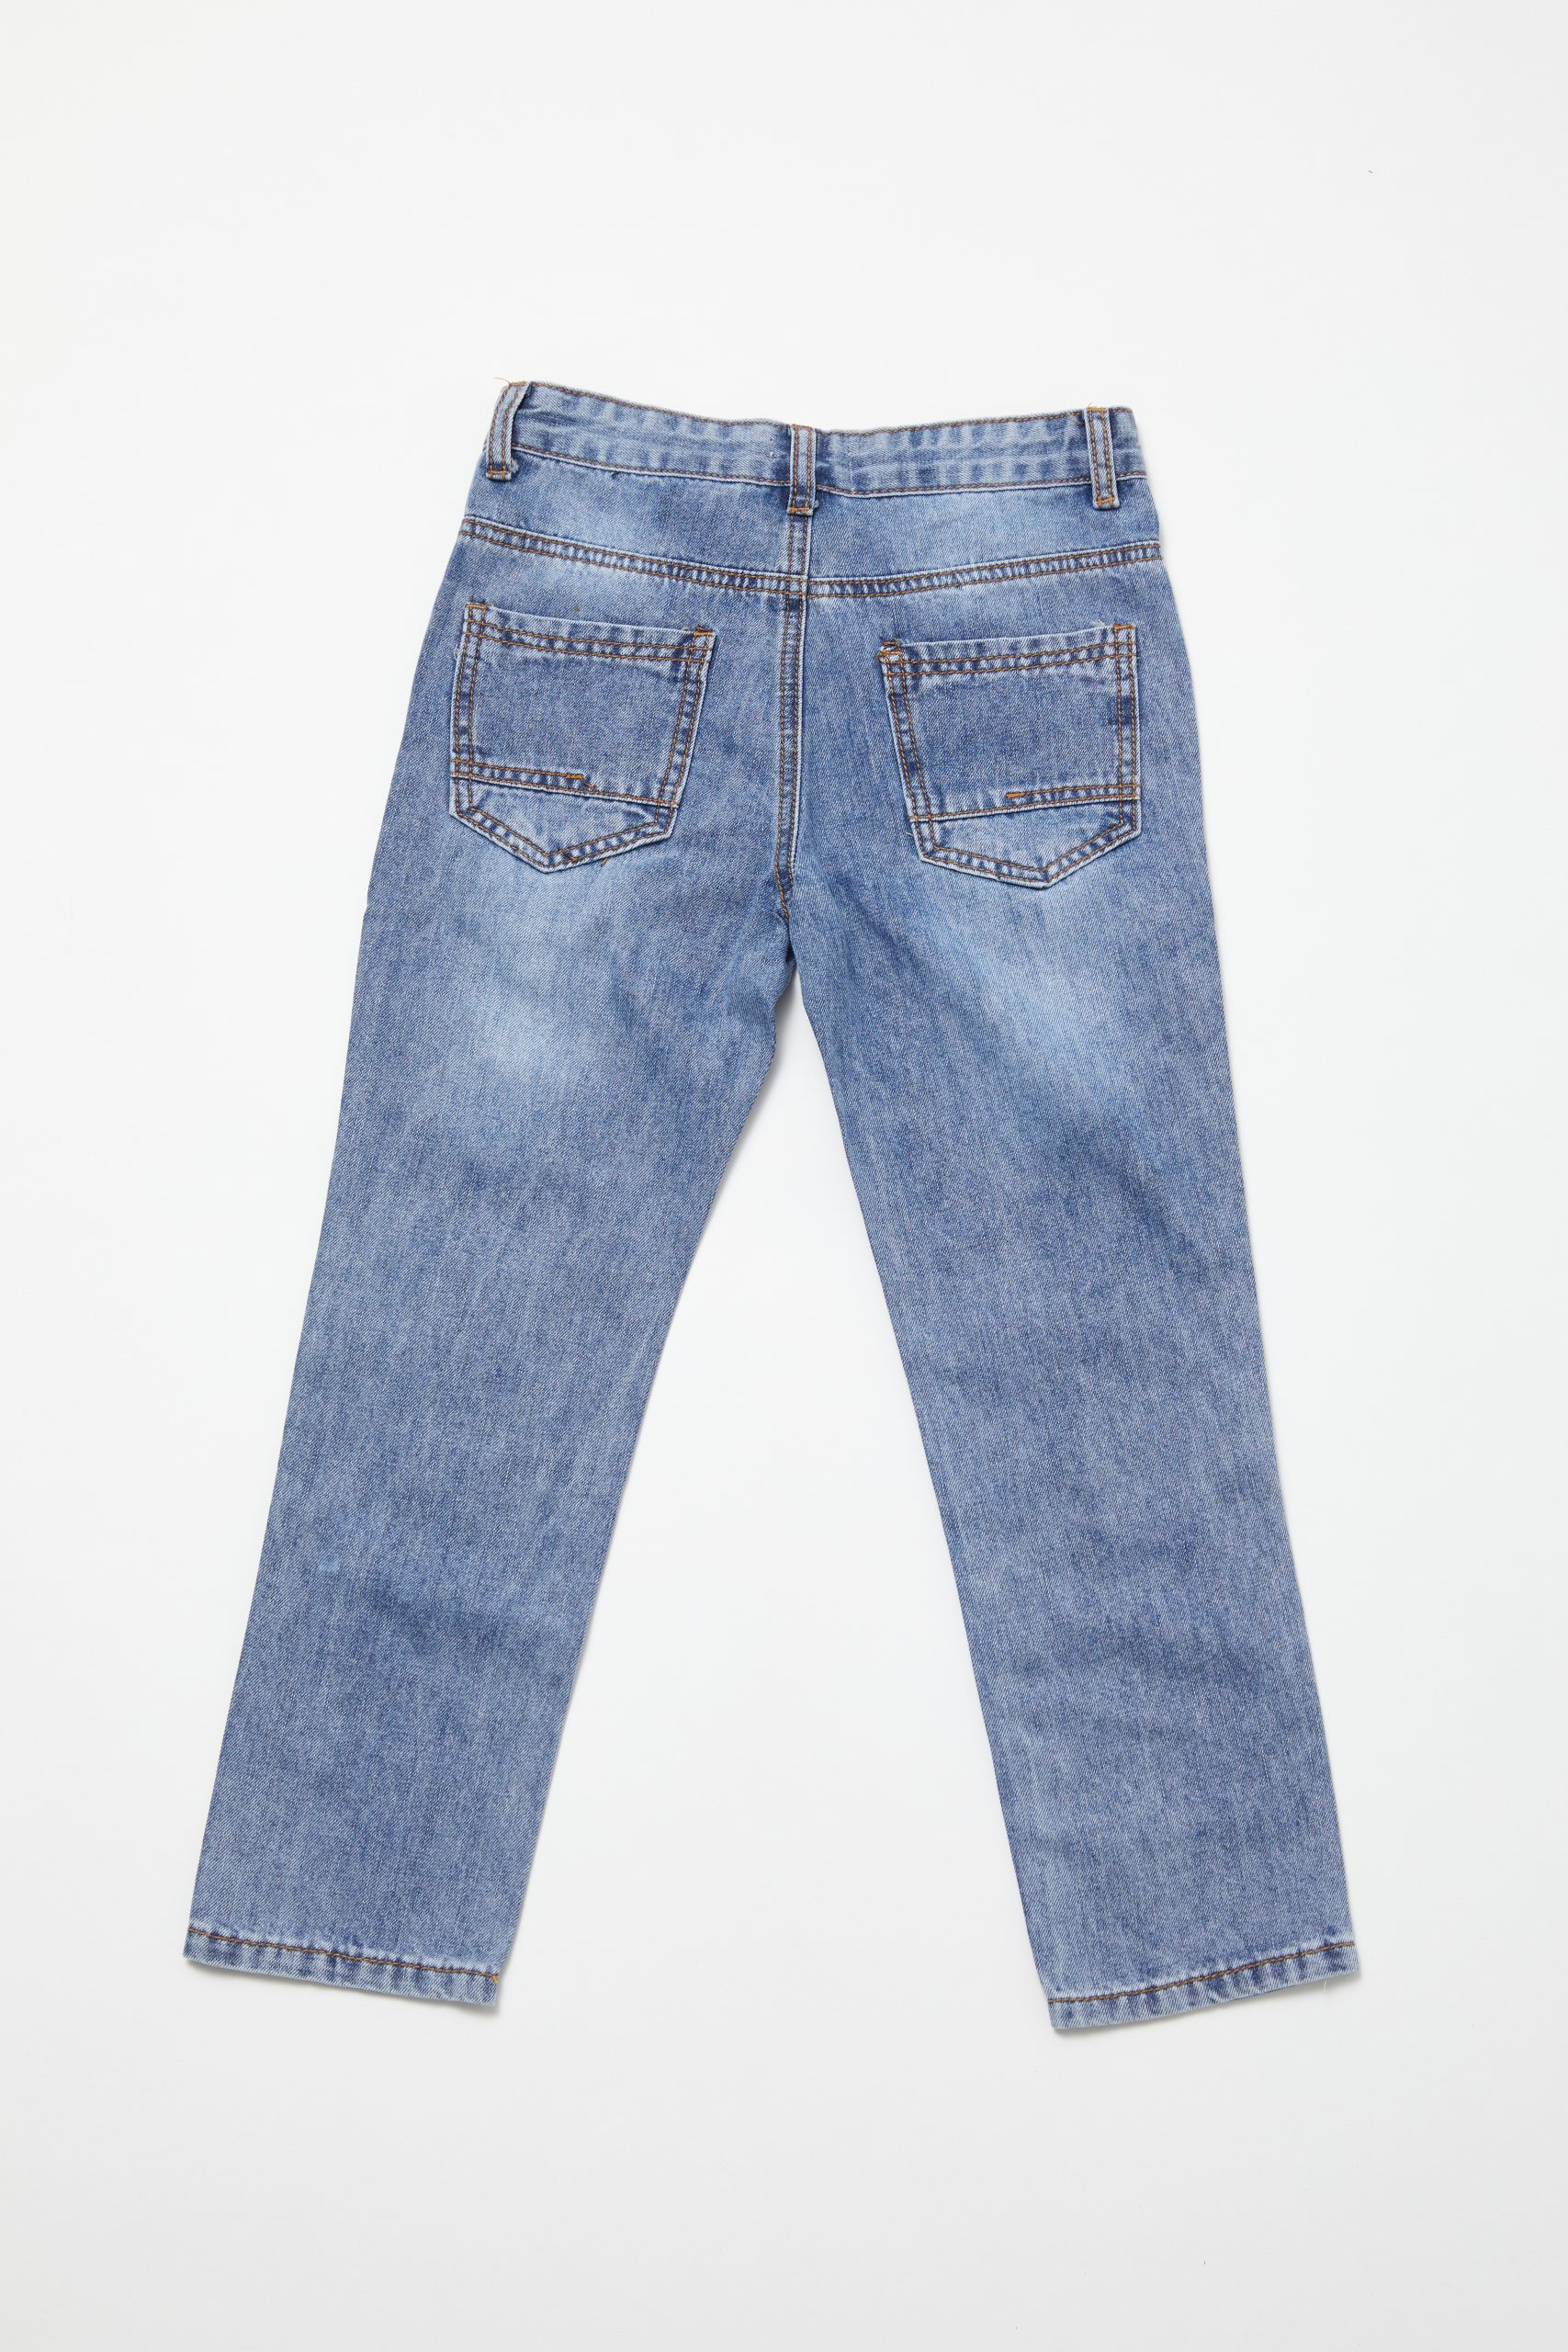 Boy Long Denim Jeans with Design - Koolkutela Fashion